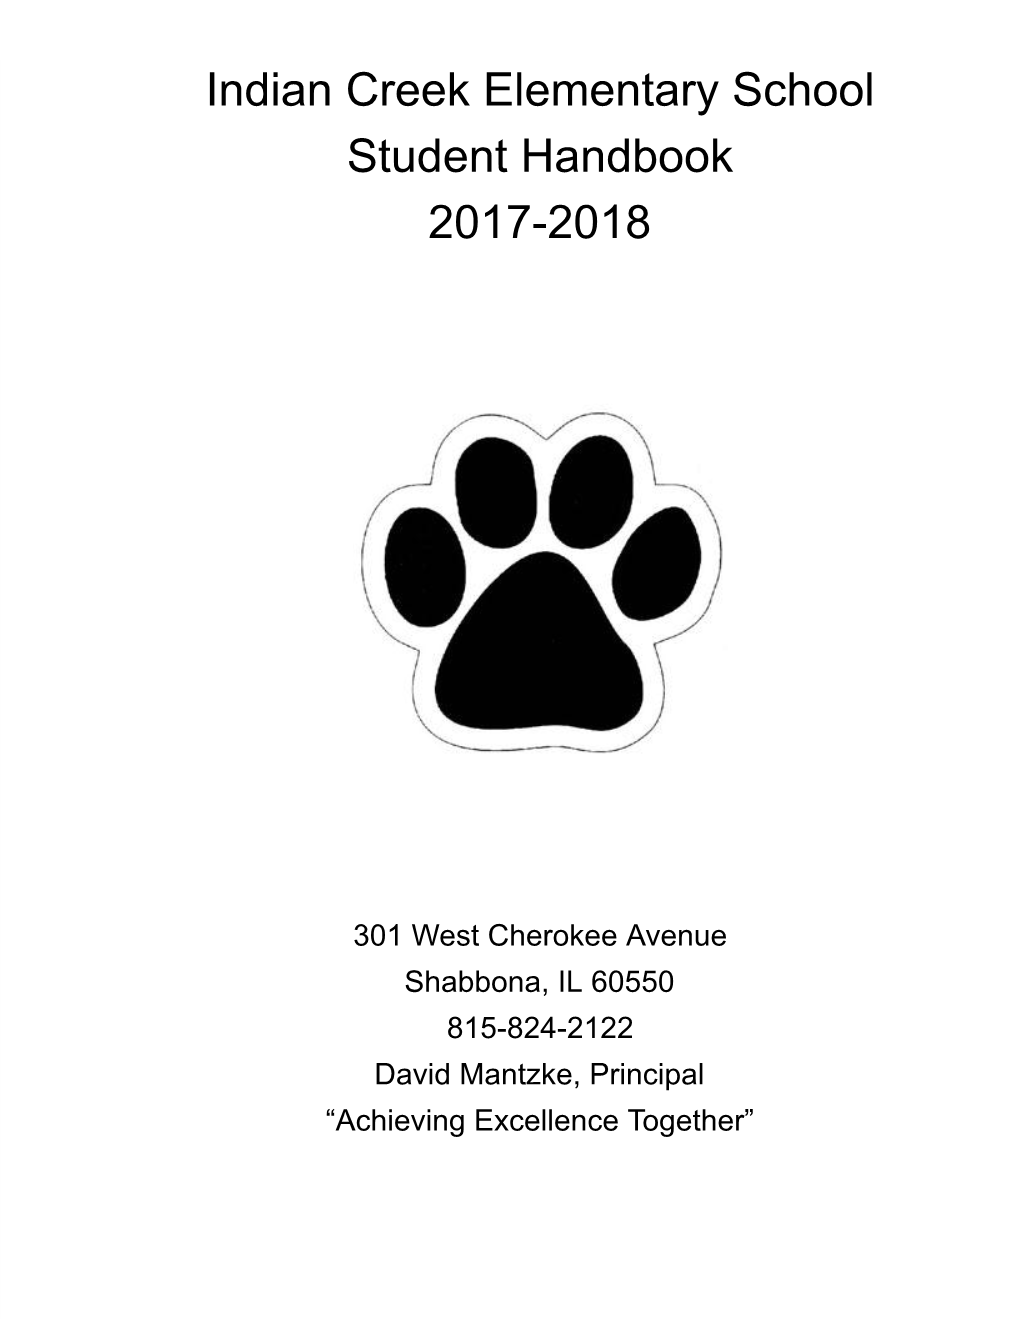 Indian Creek Elementary School Student Handbook 2017-2018